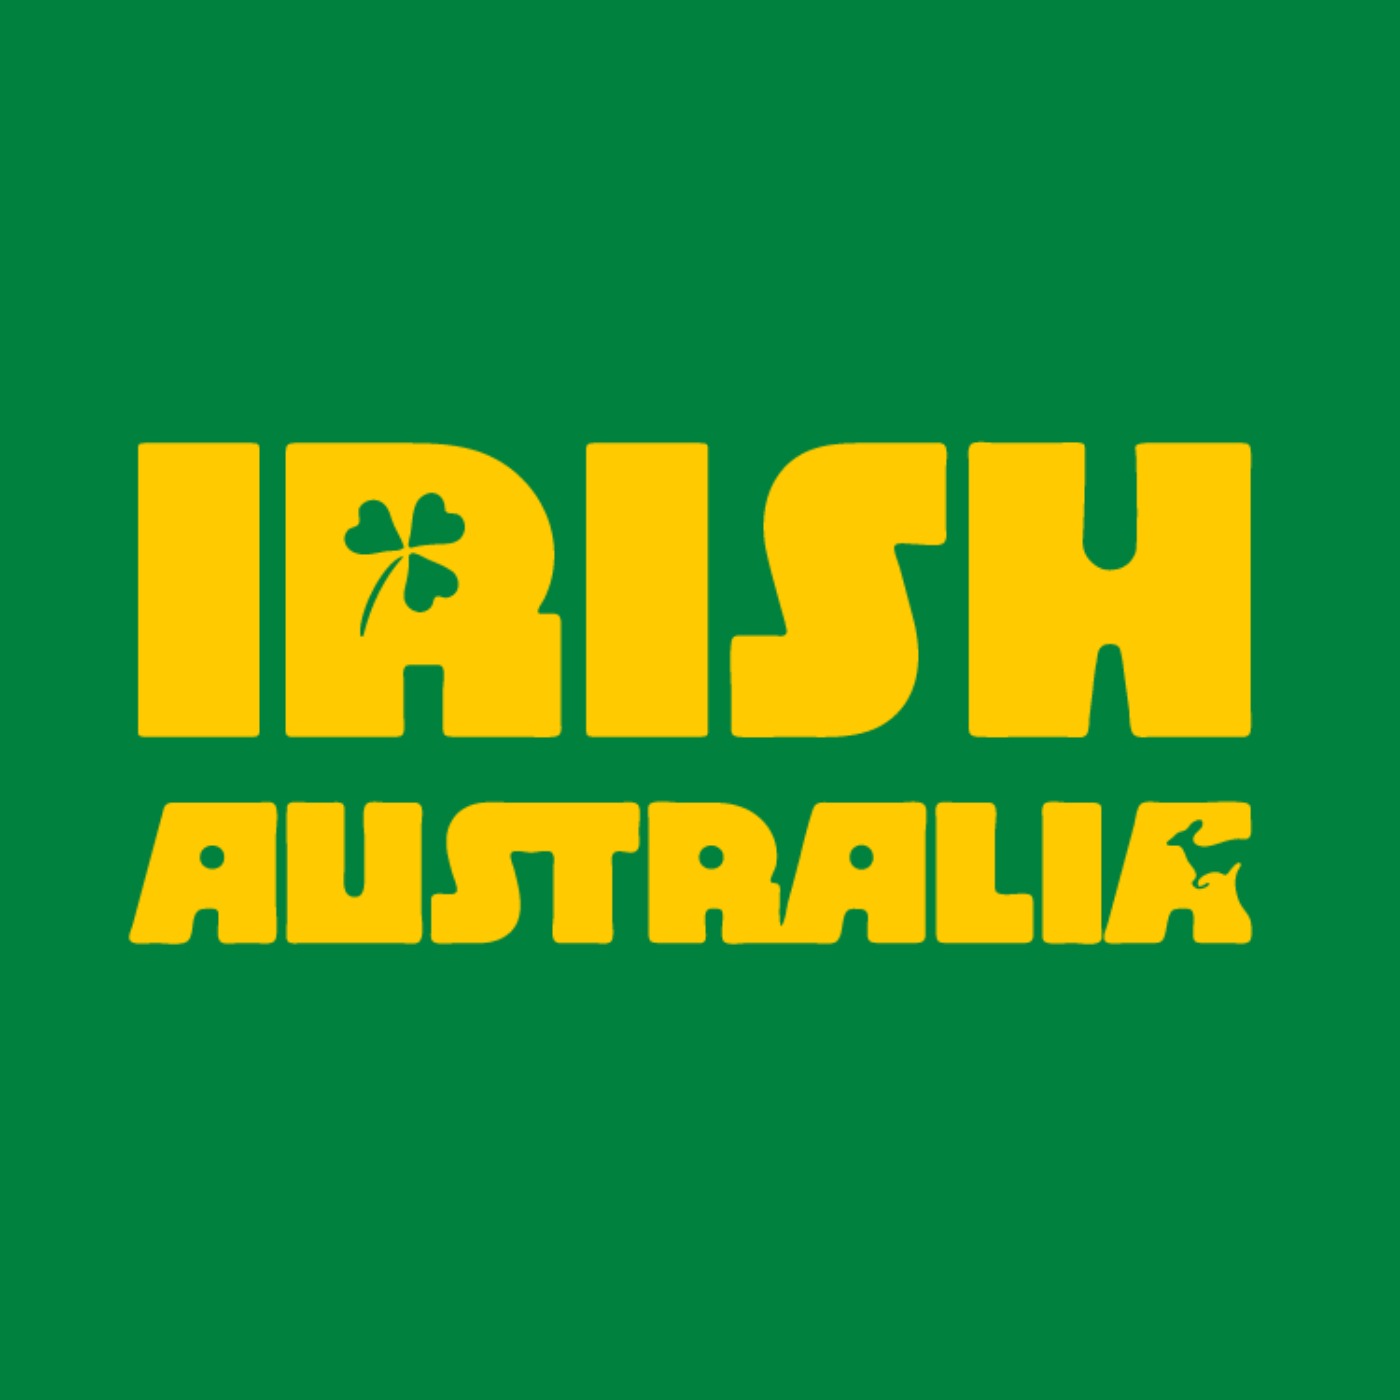 The Irish Australia Podcast Trailer